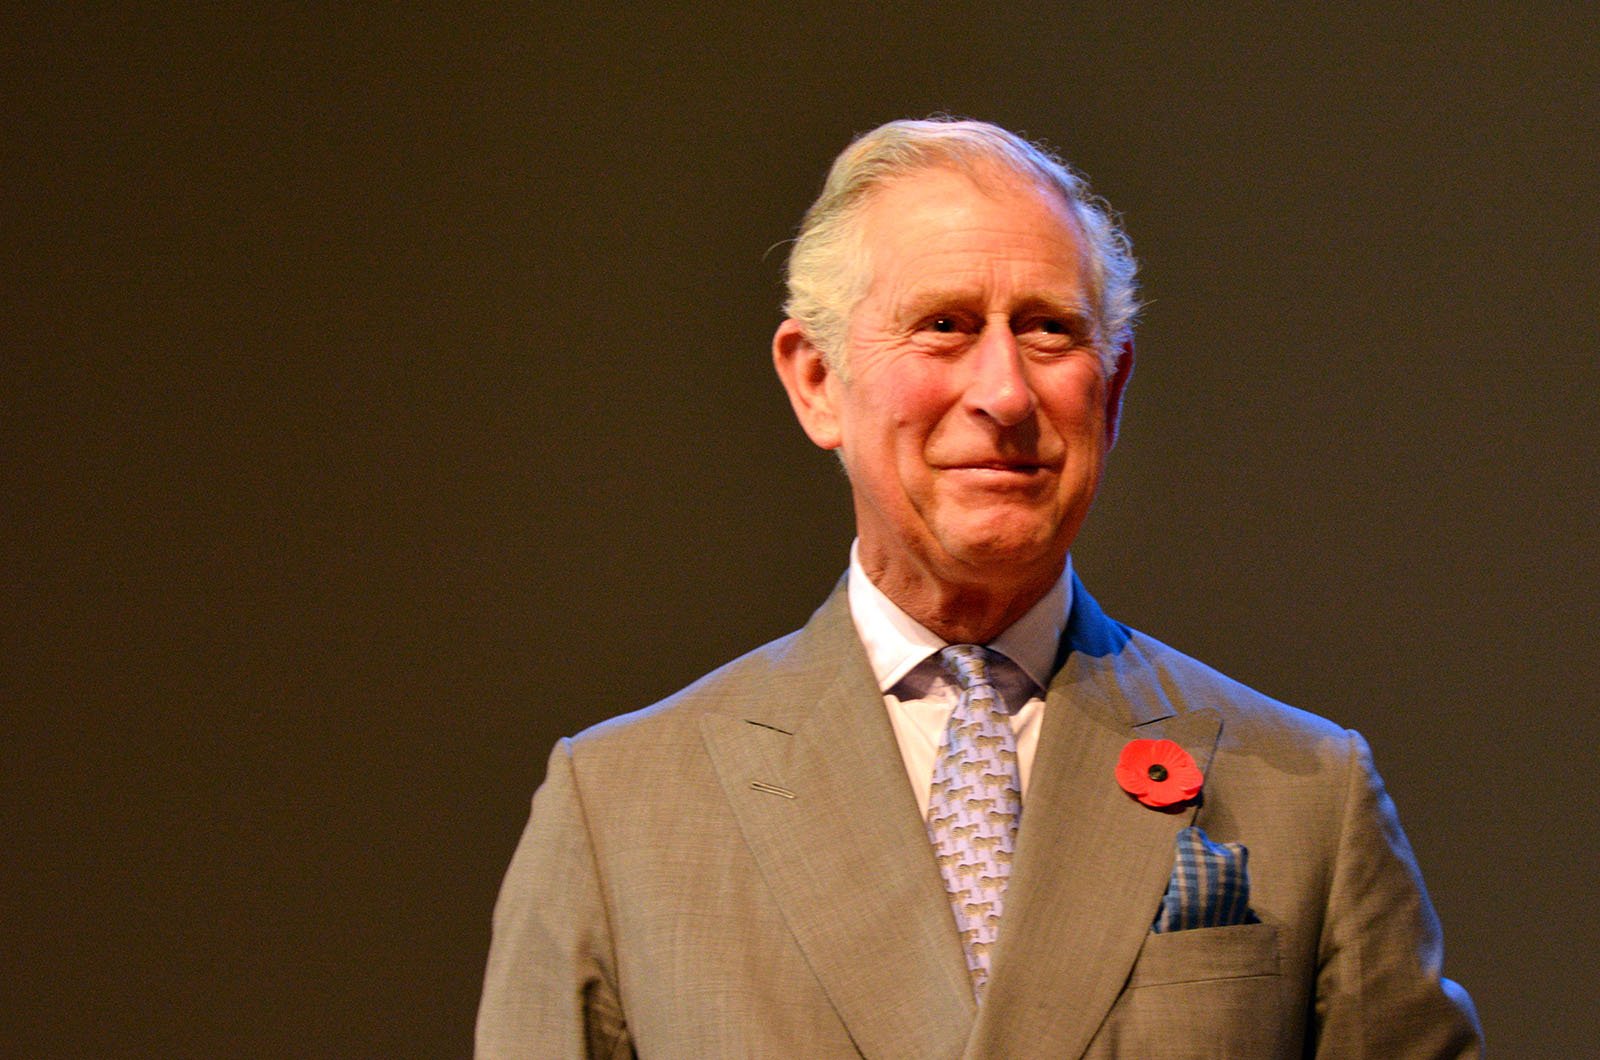 Photograph of King Charles